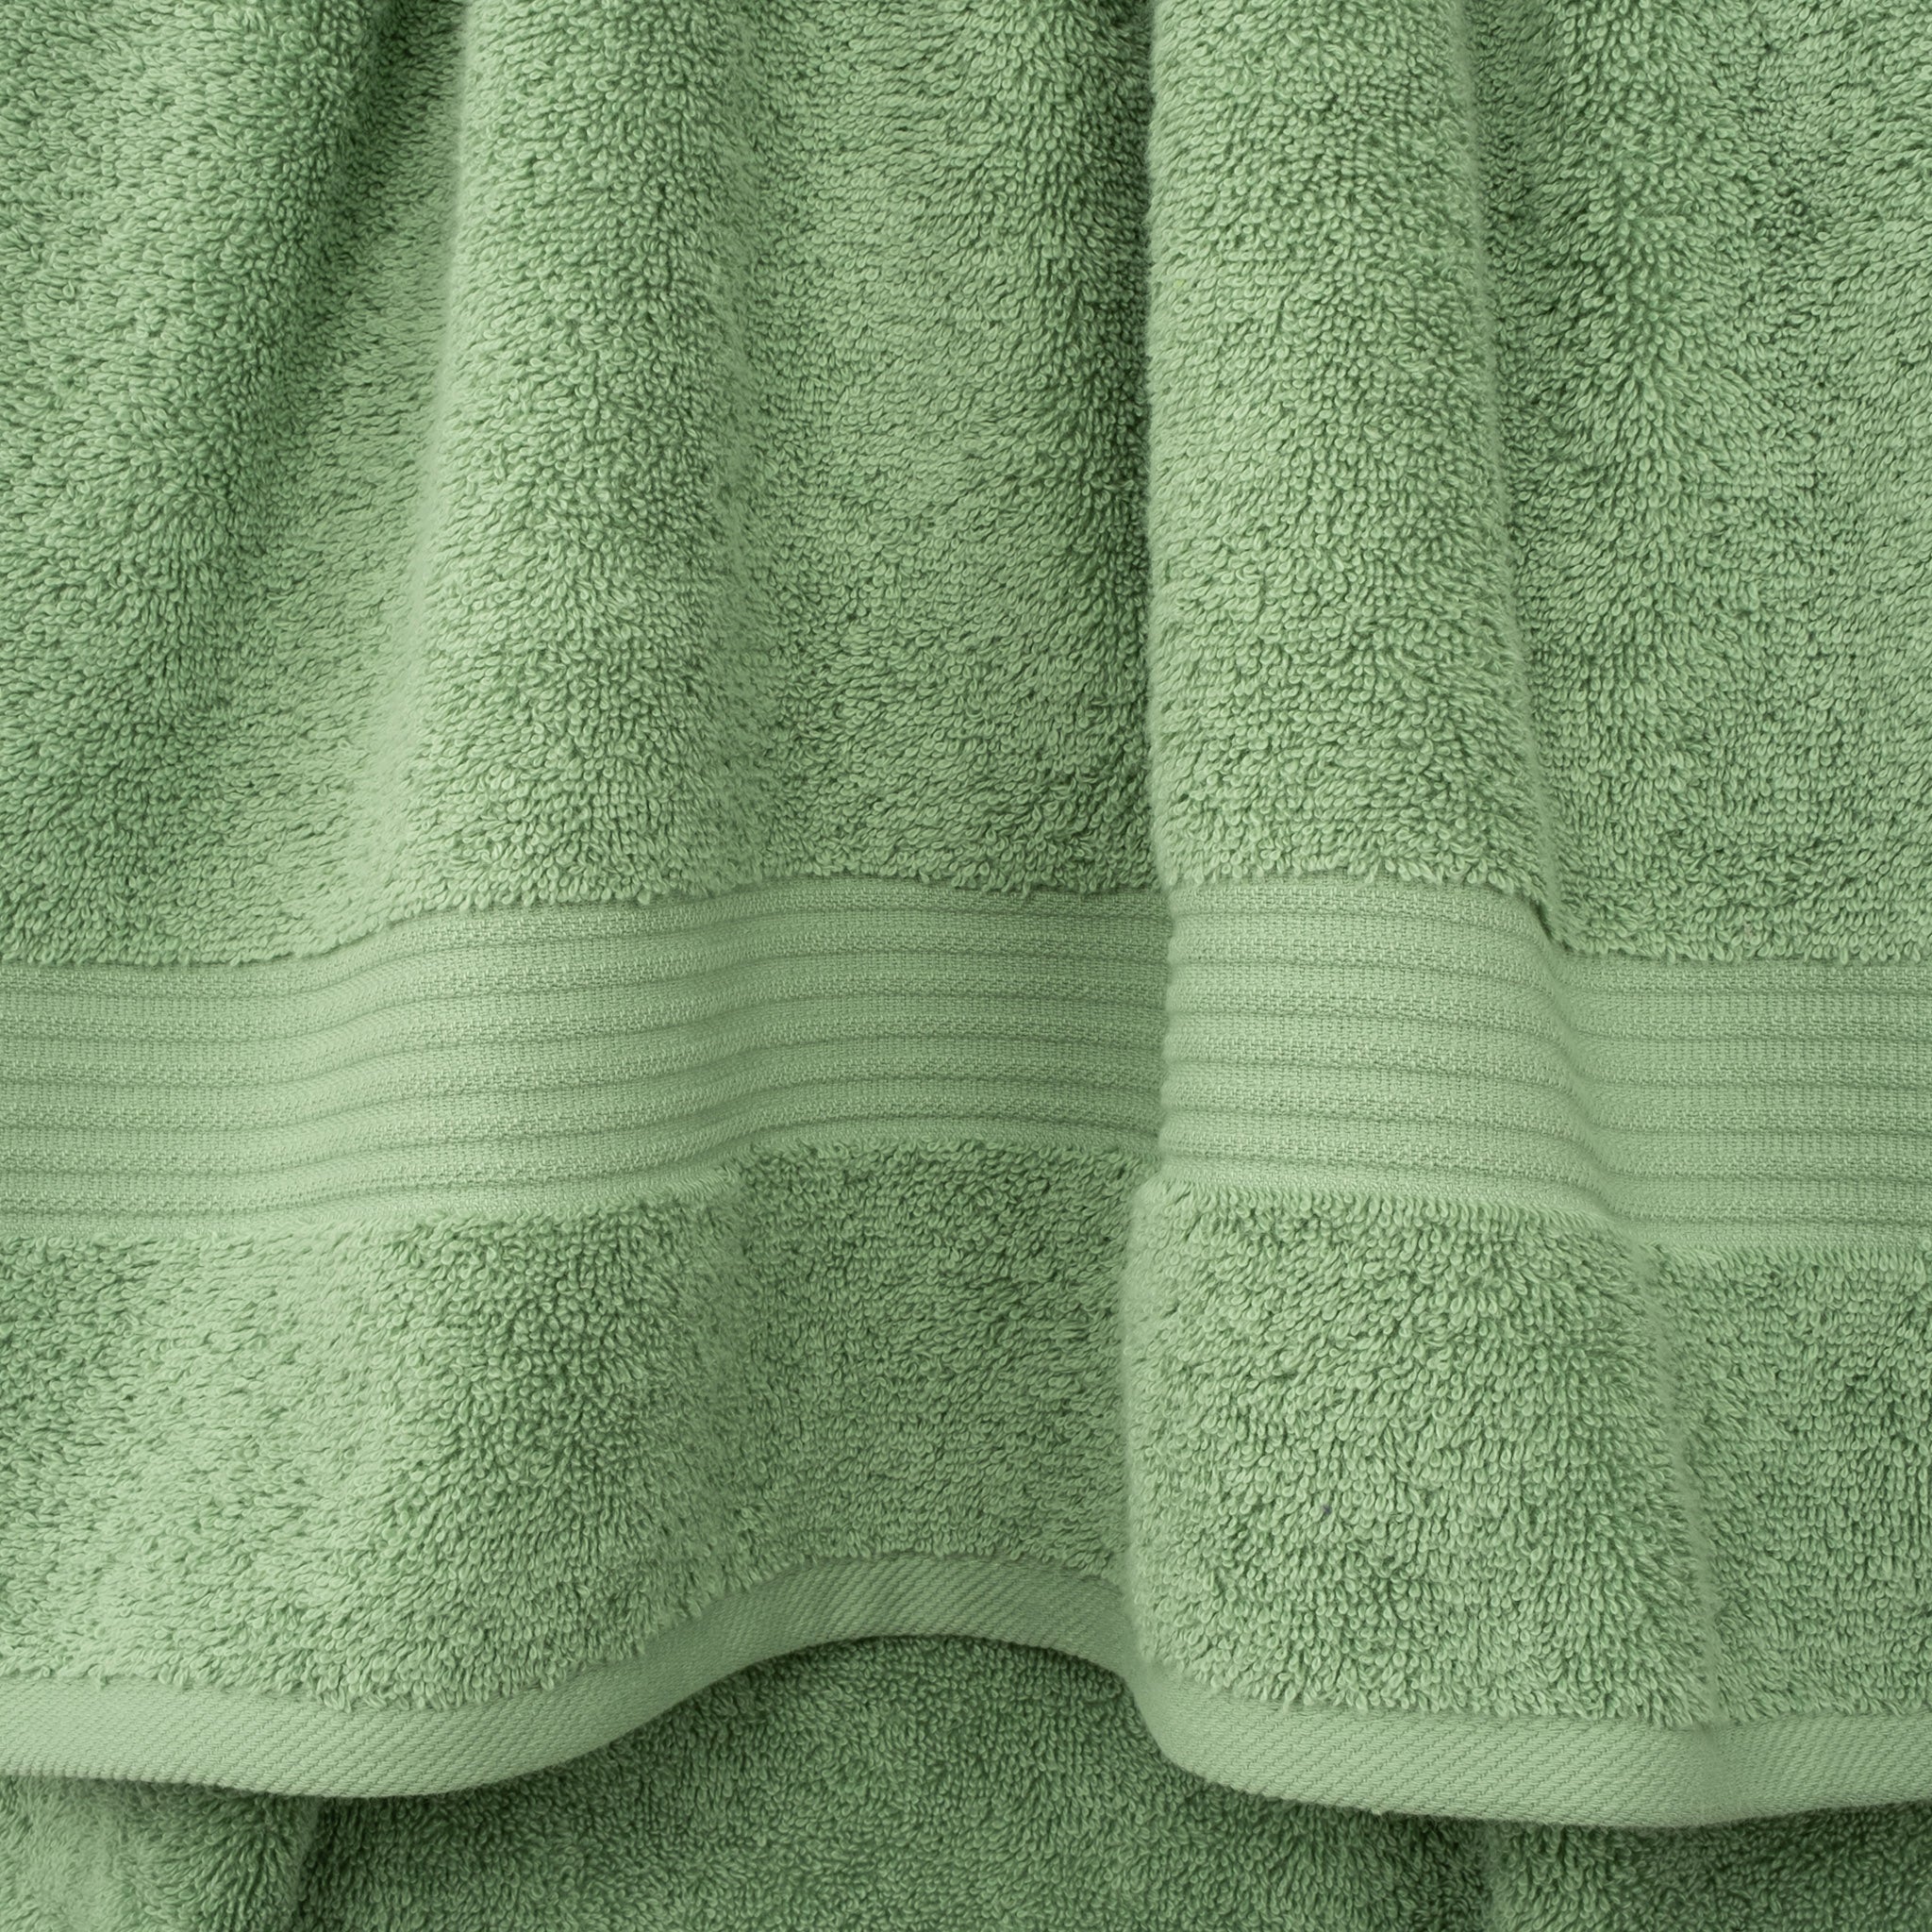 American Soft Linen Bekos 100% Cotton Turkish Towels, 4 Piece Hand Towel Set -sage-green-03